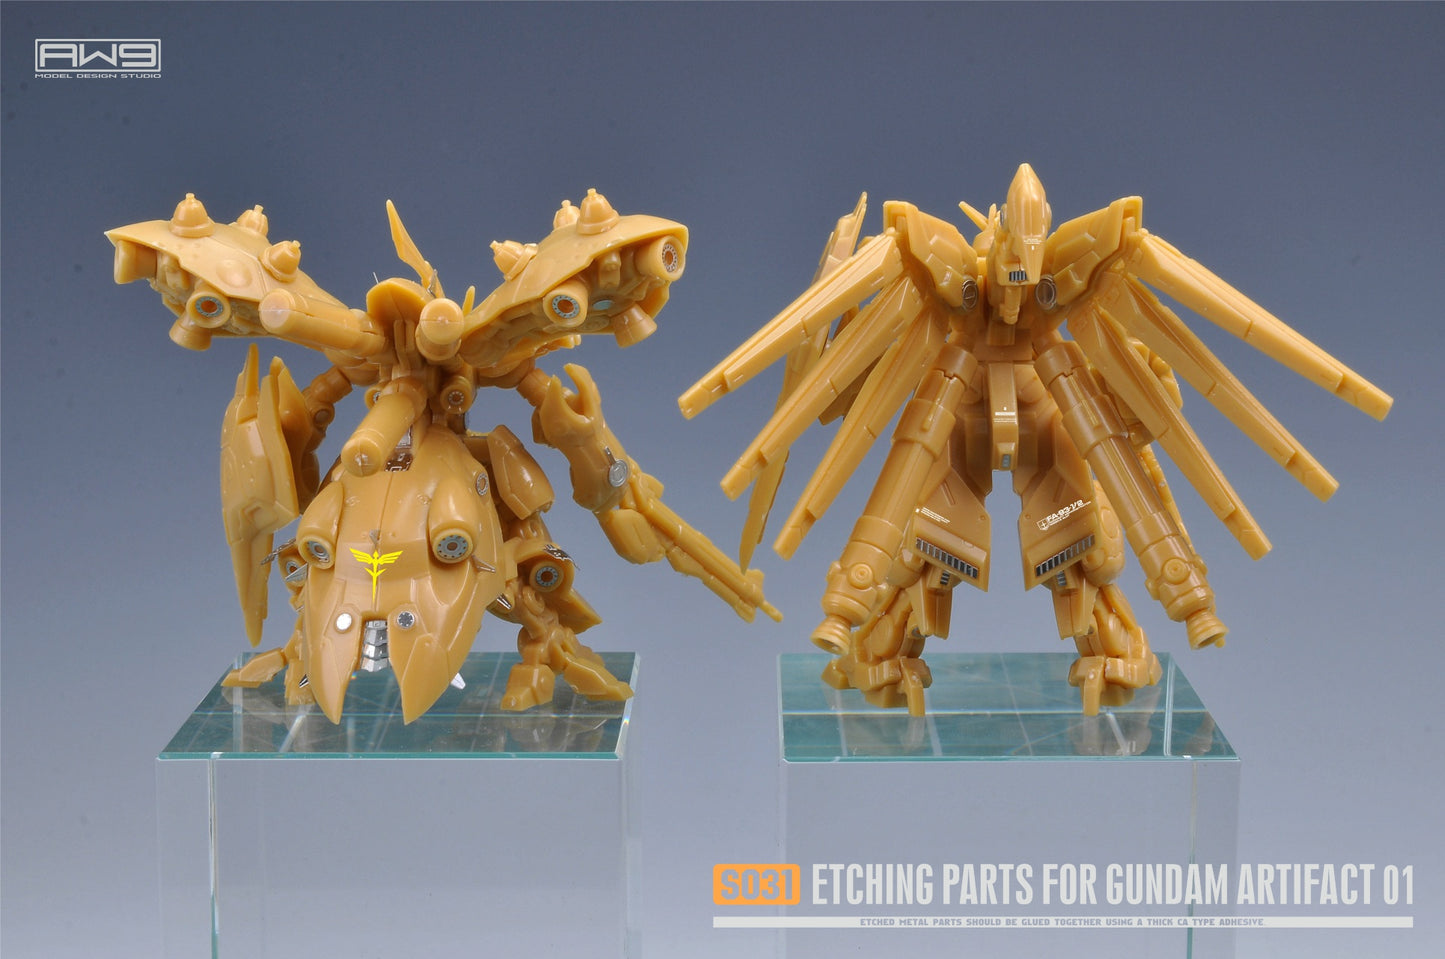 Madworks S031 Etching Parts for Gundam Artifact Series 1